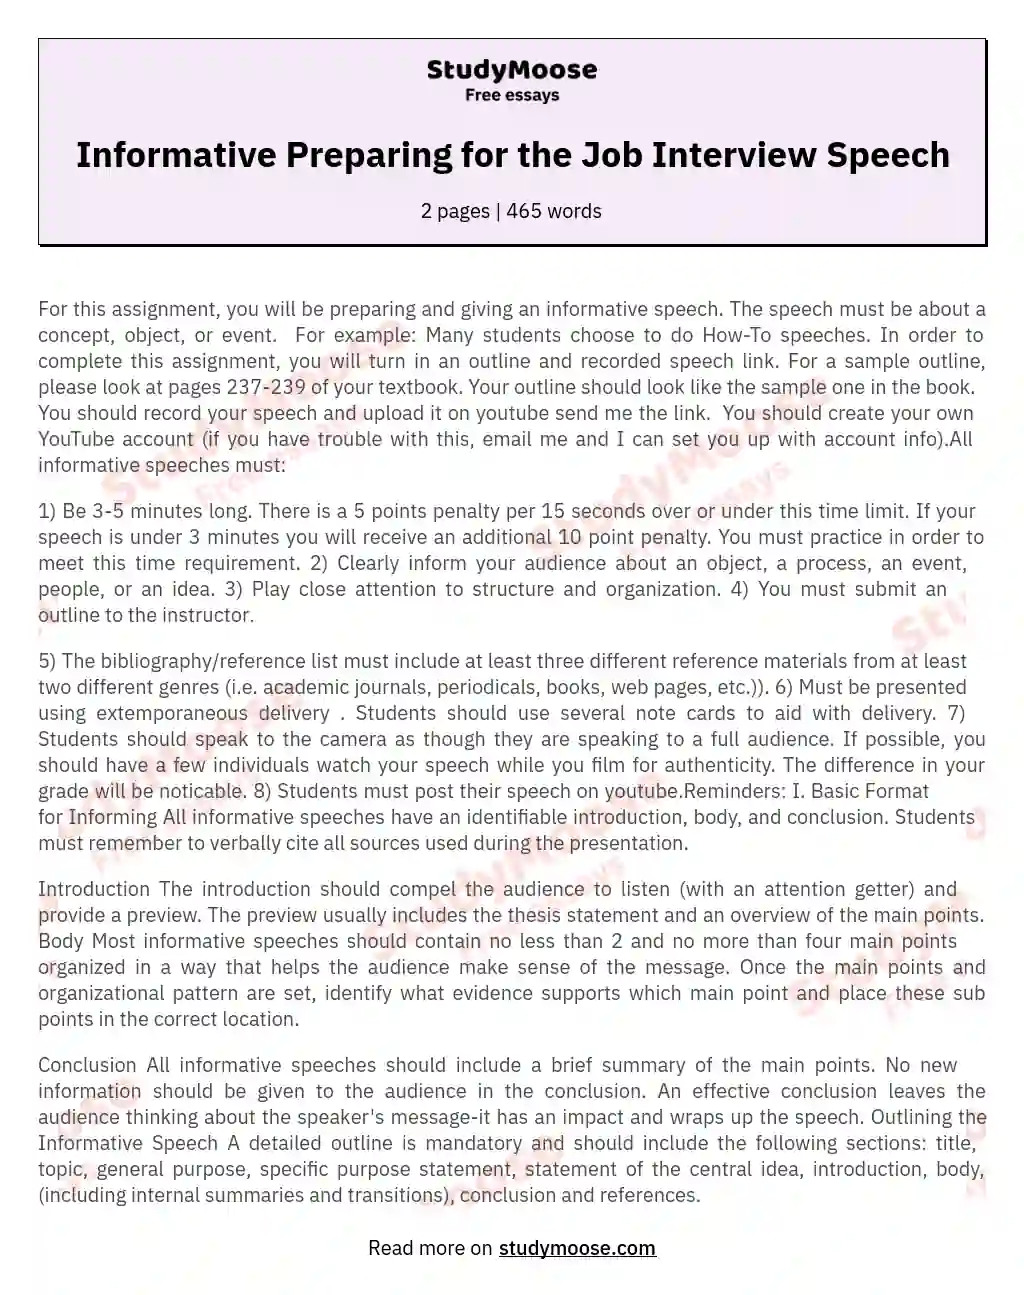 Informative Preparing for the Job Interview Speech